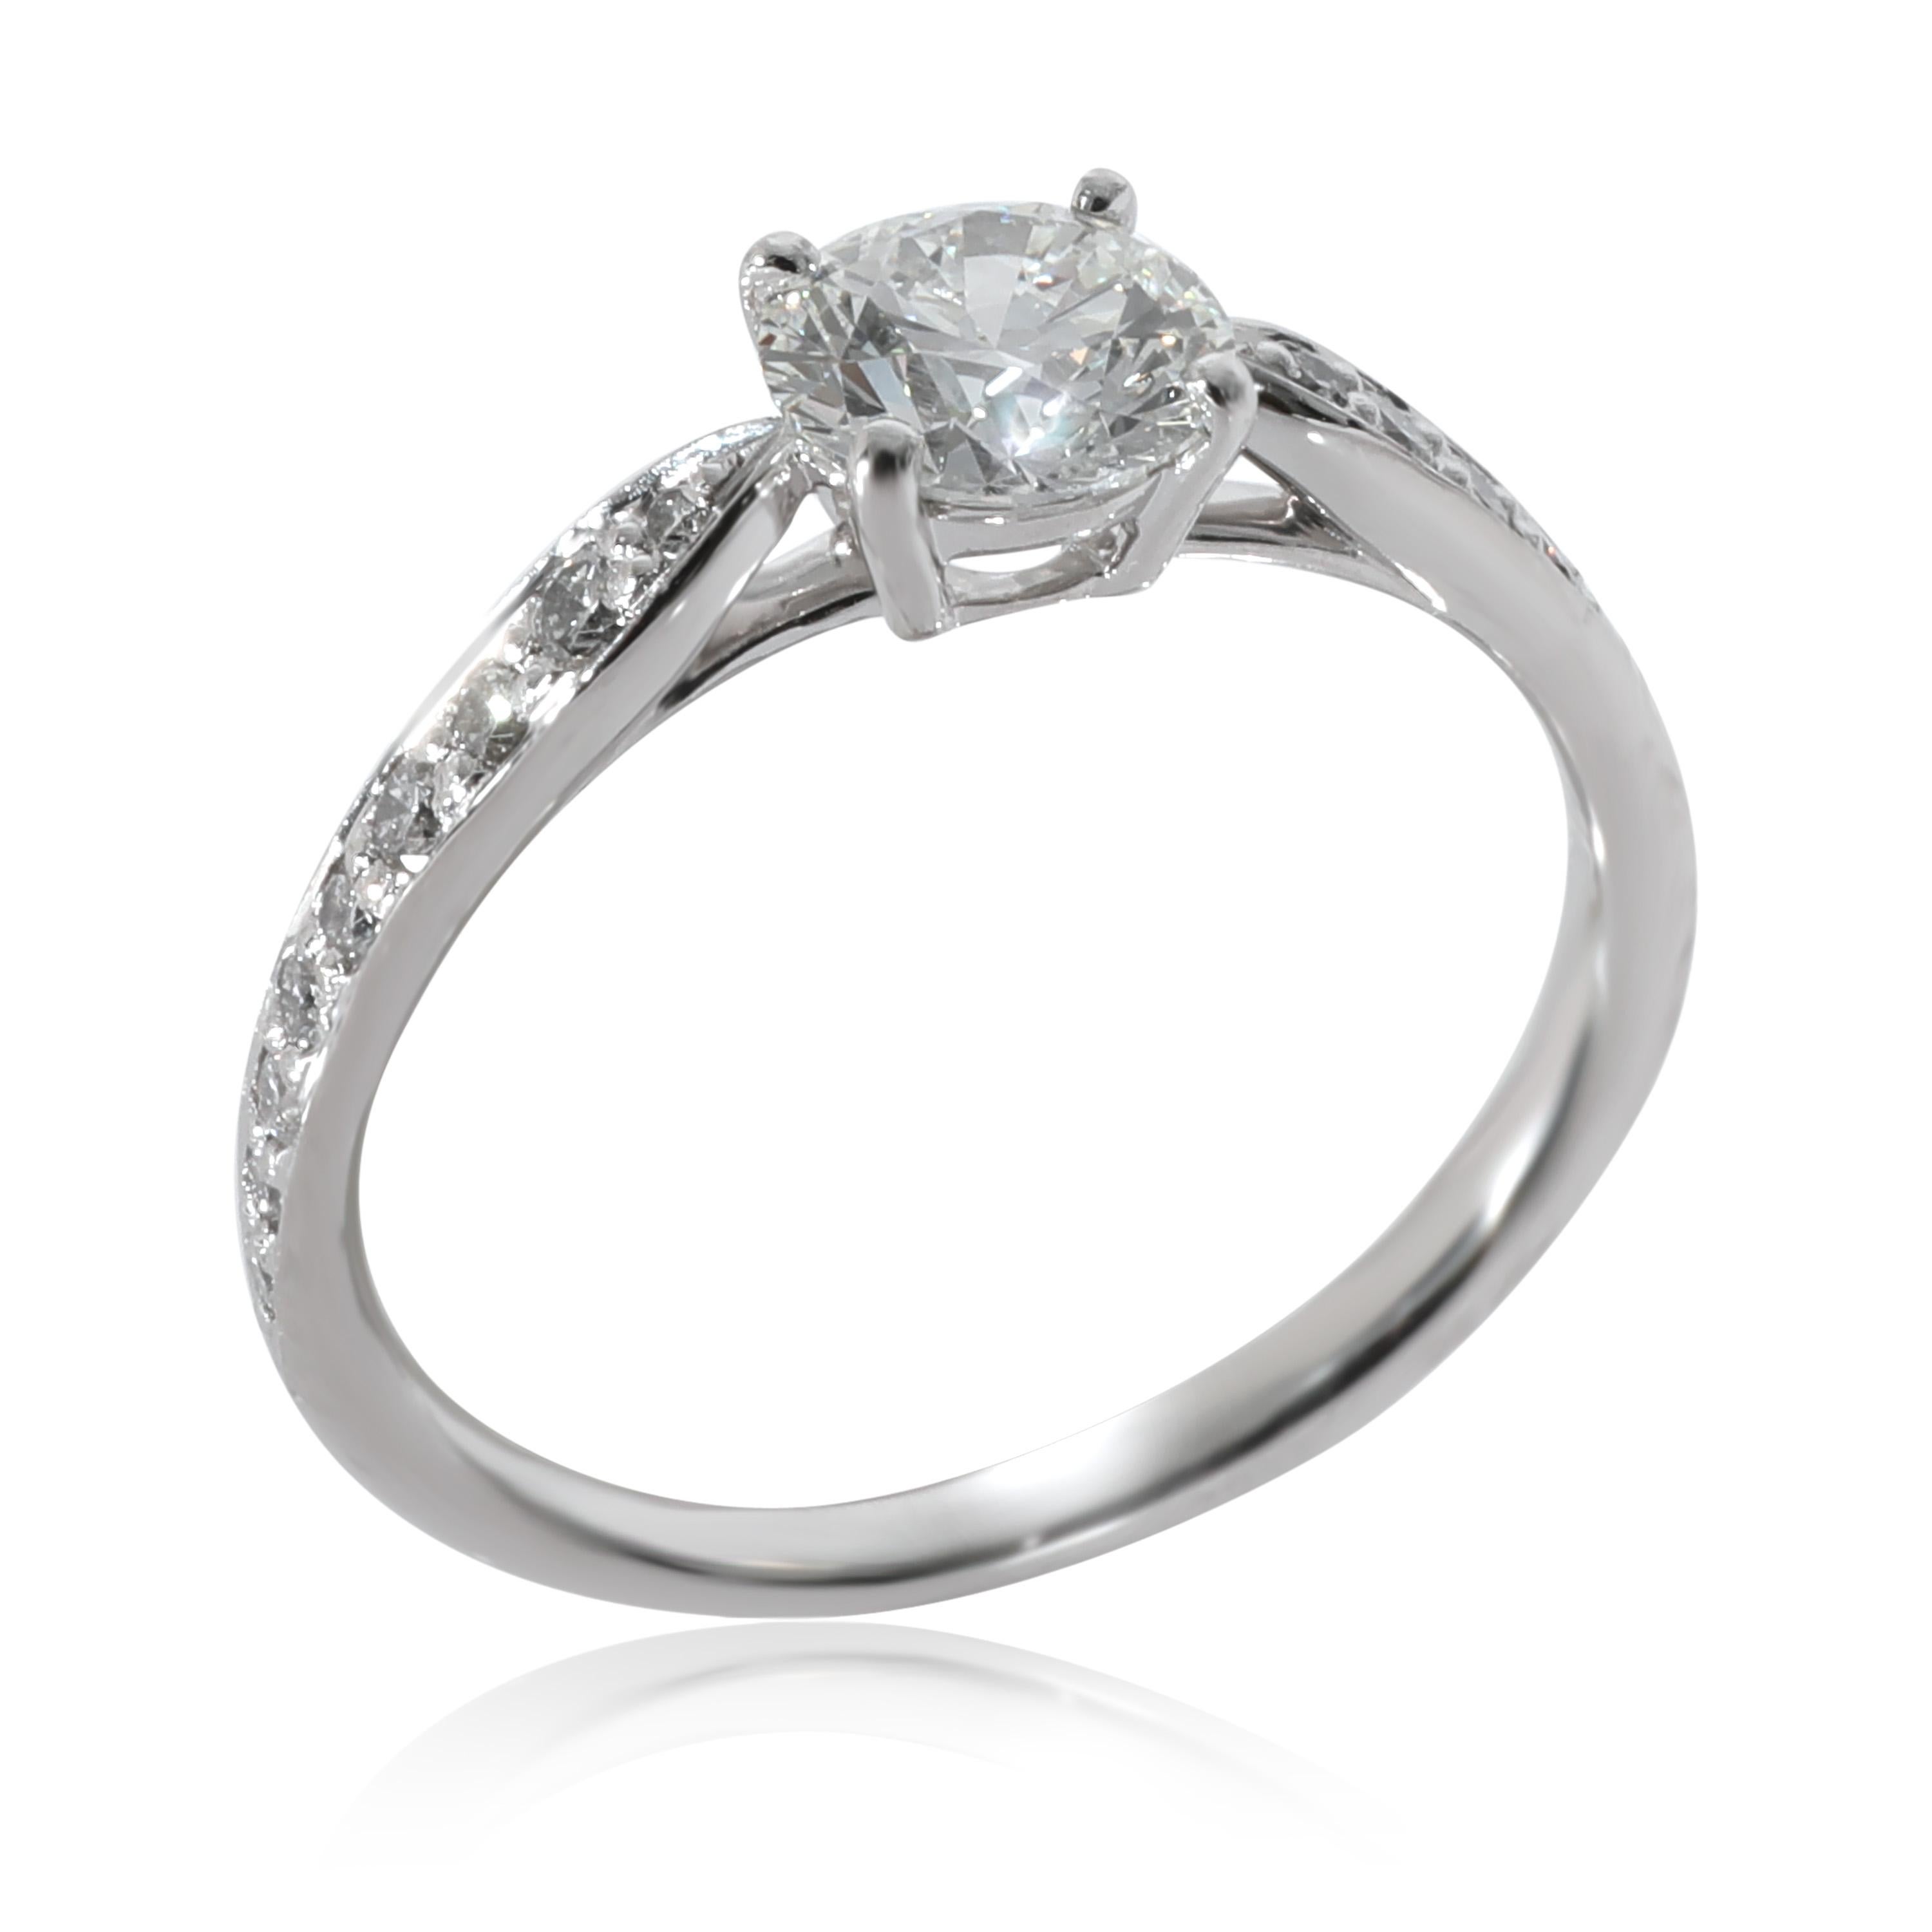 Women's Tiffany & Co. Harmony Diamond Engagement Ring in Platinum G VS1 0.77 Carat